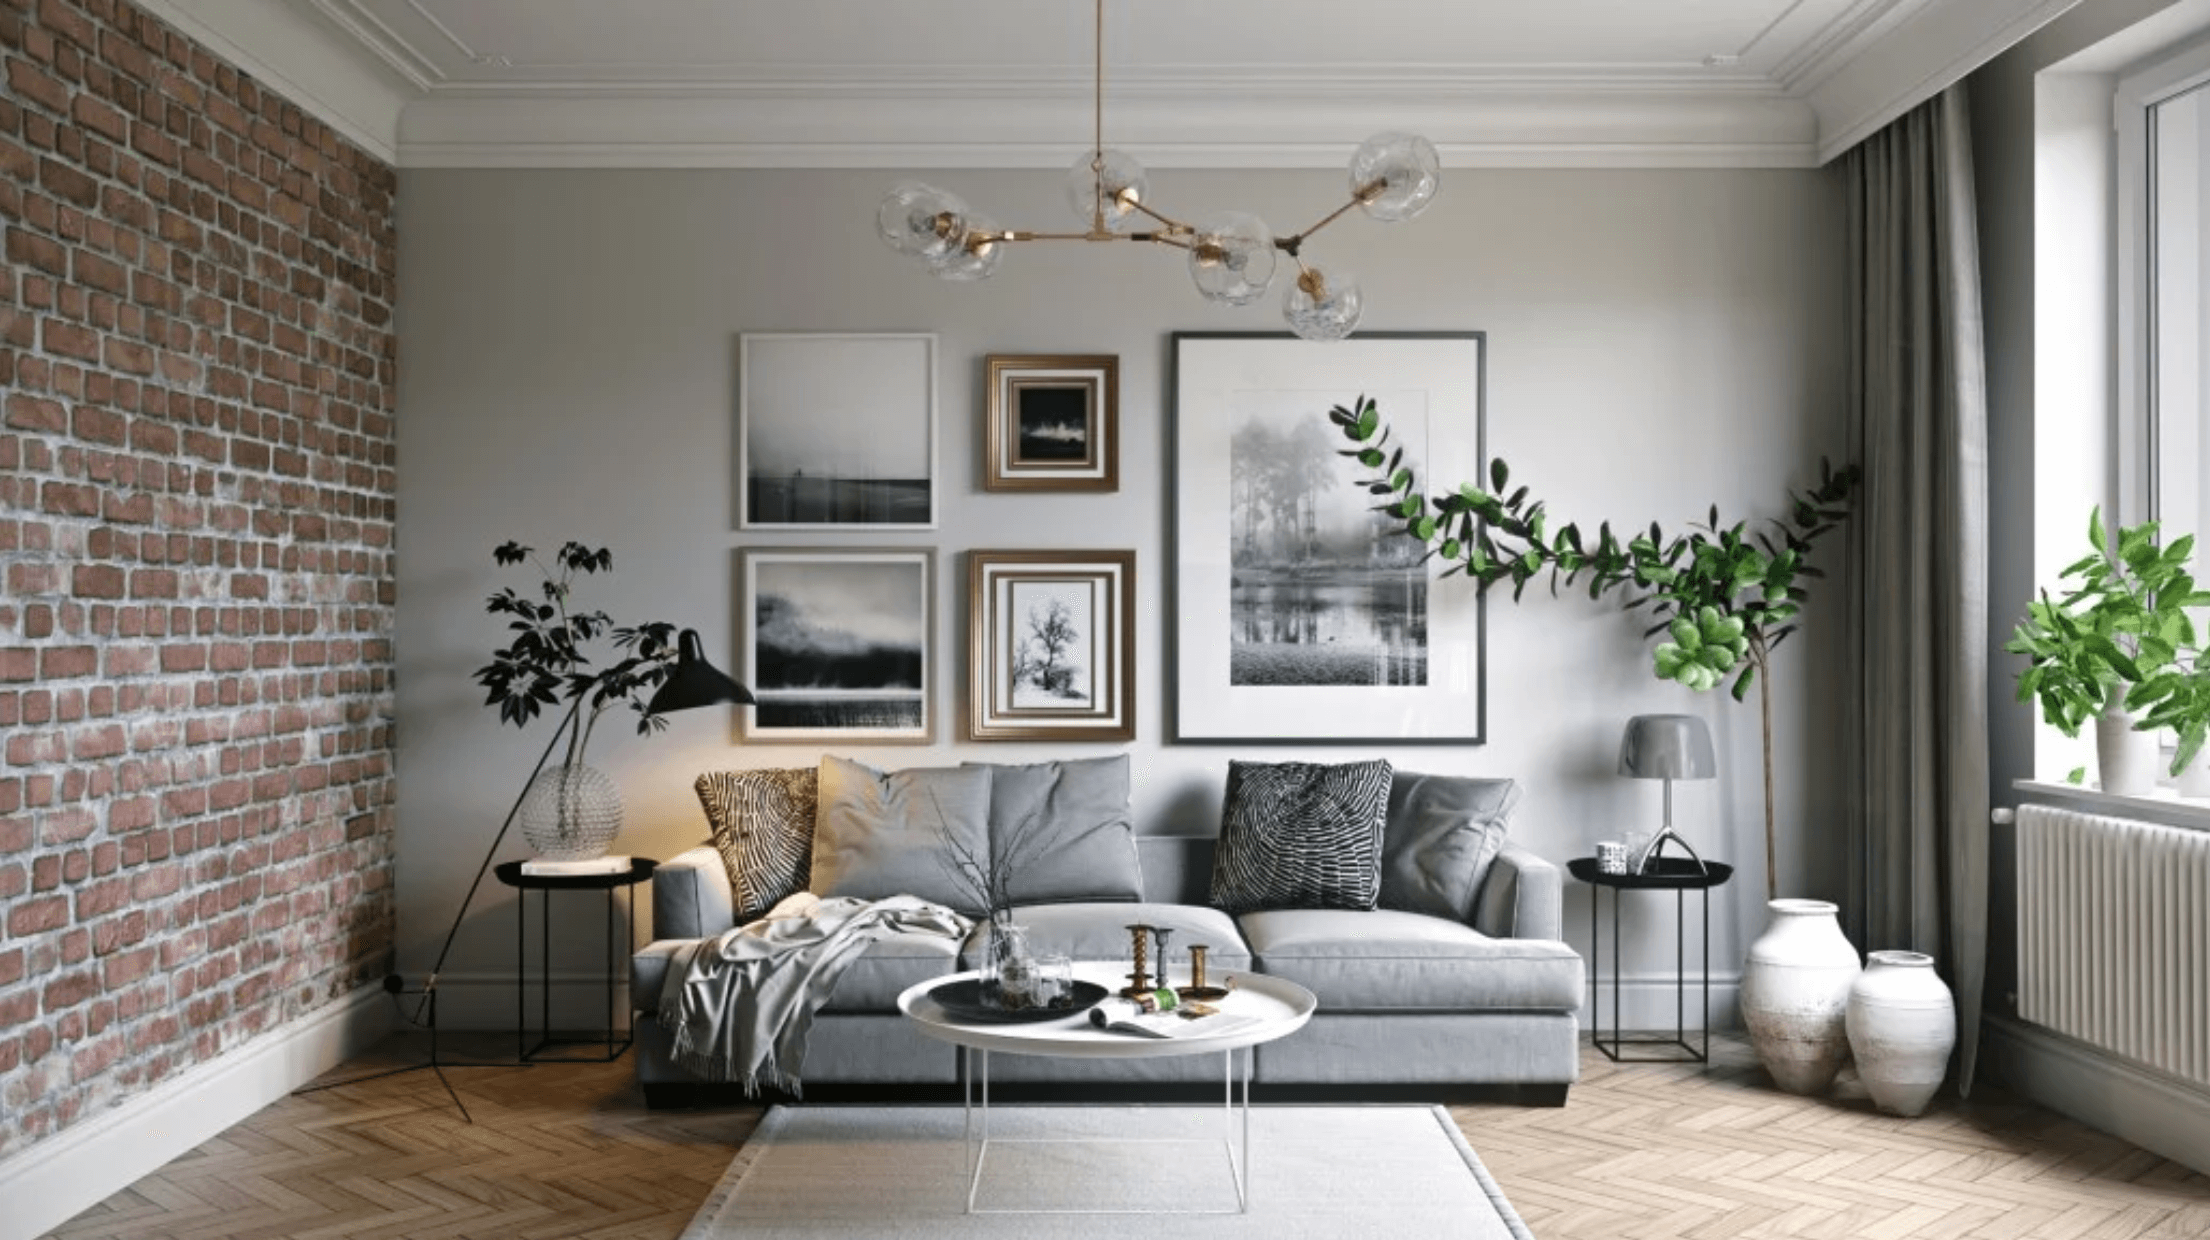 https://www.decorilla.com/online-decorating/wp-content/uploads/2018/10/modern-interior-design-grey-living-room2.png